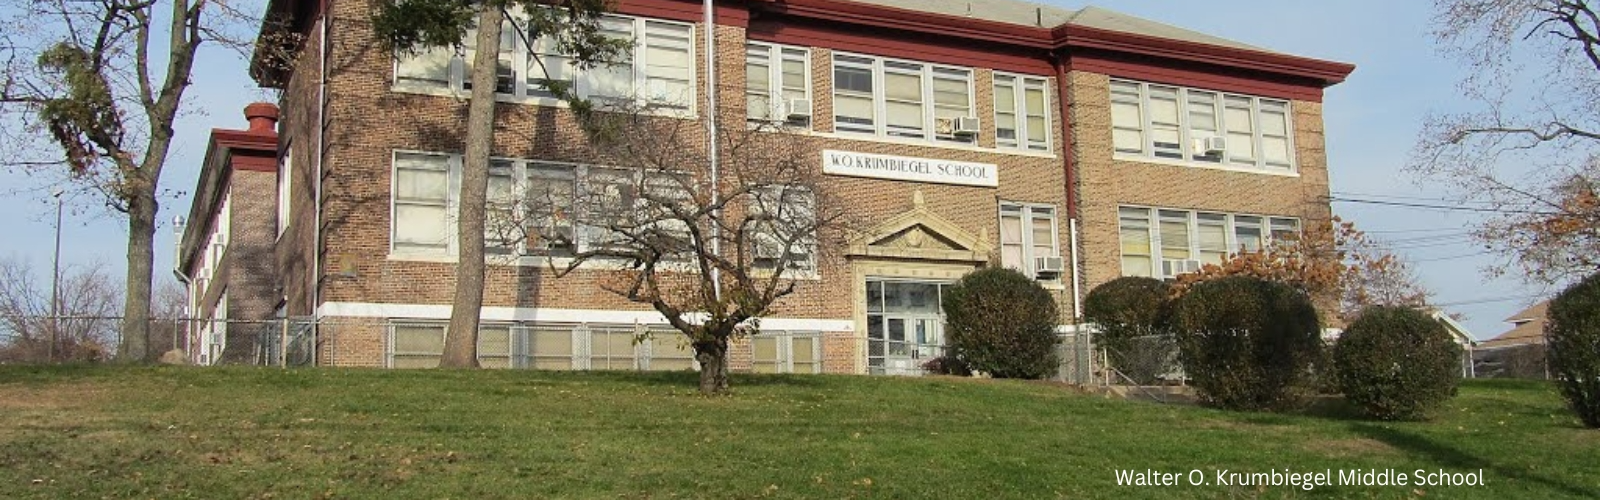 Walter O. Krumbiegel Middle School